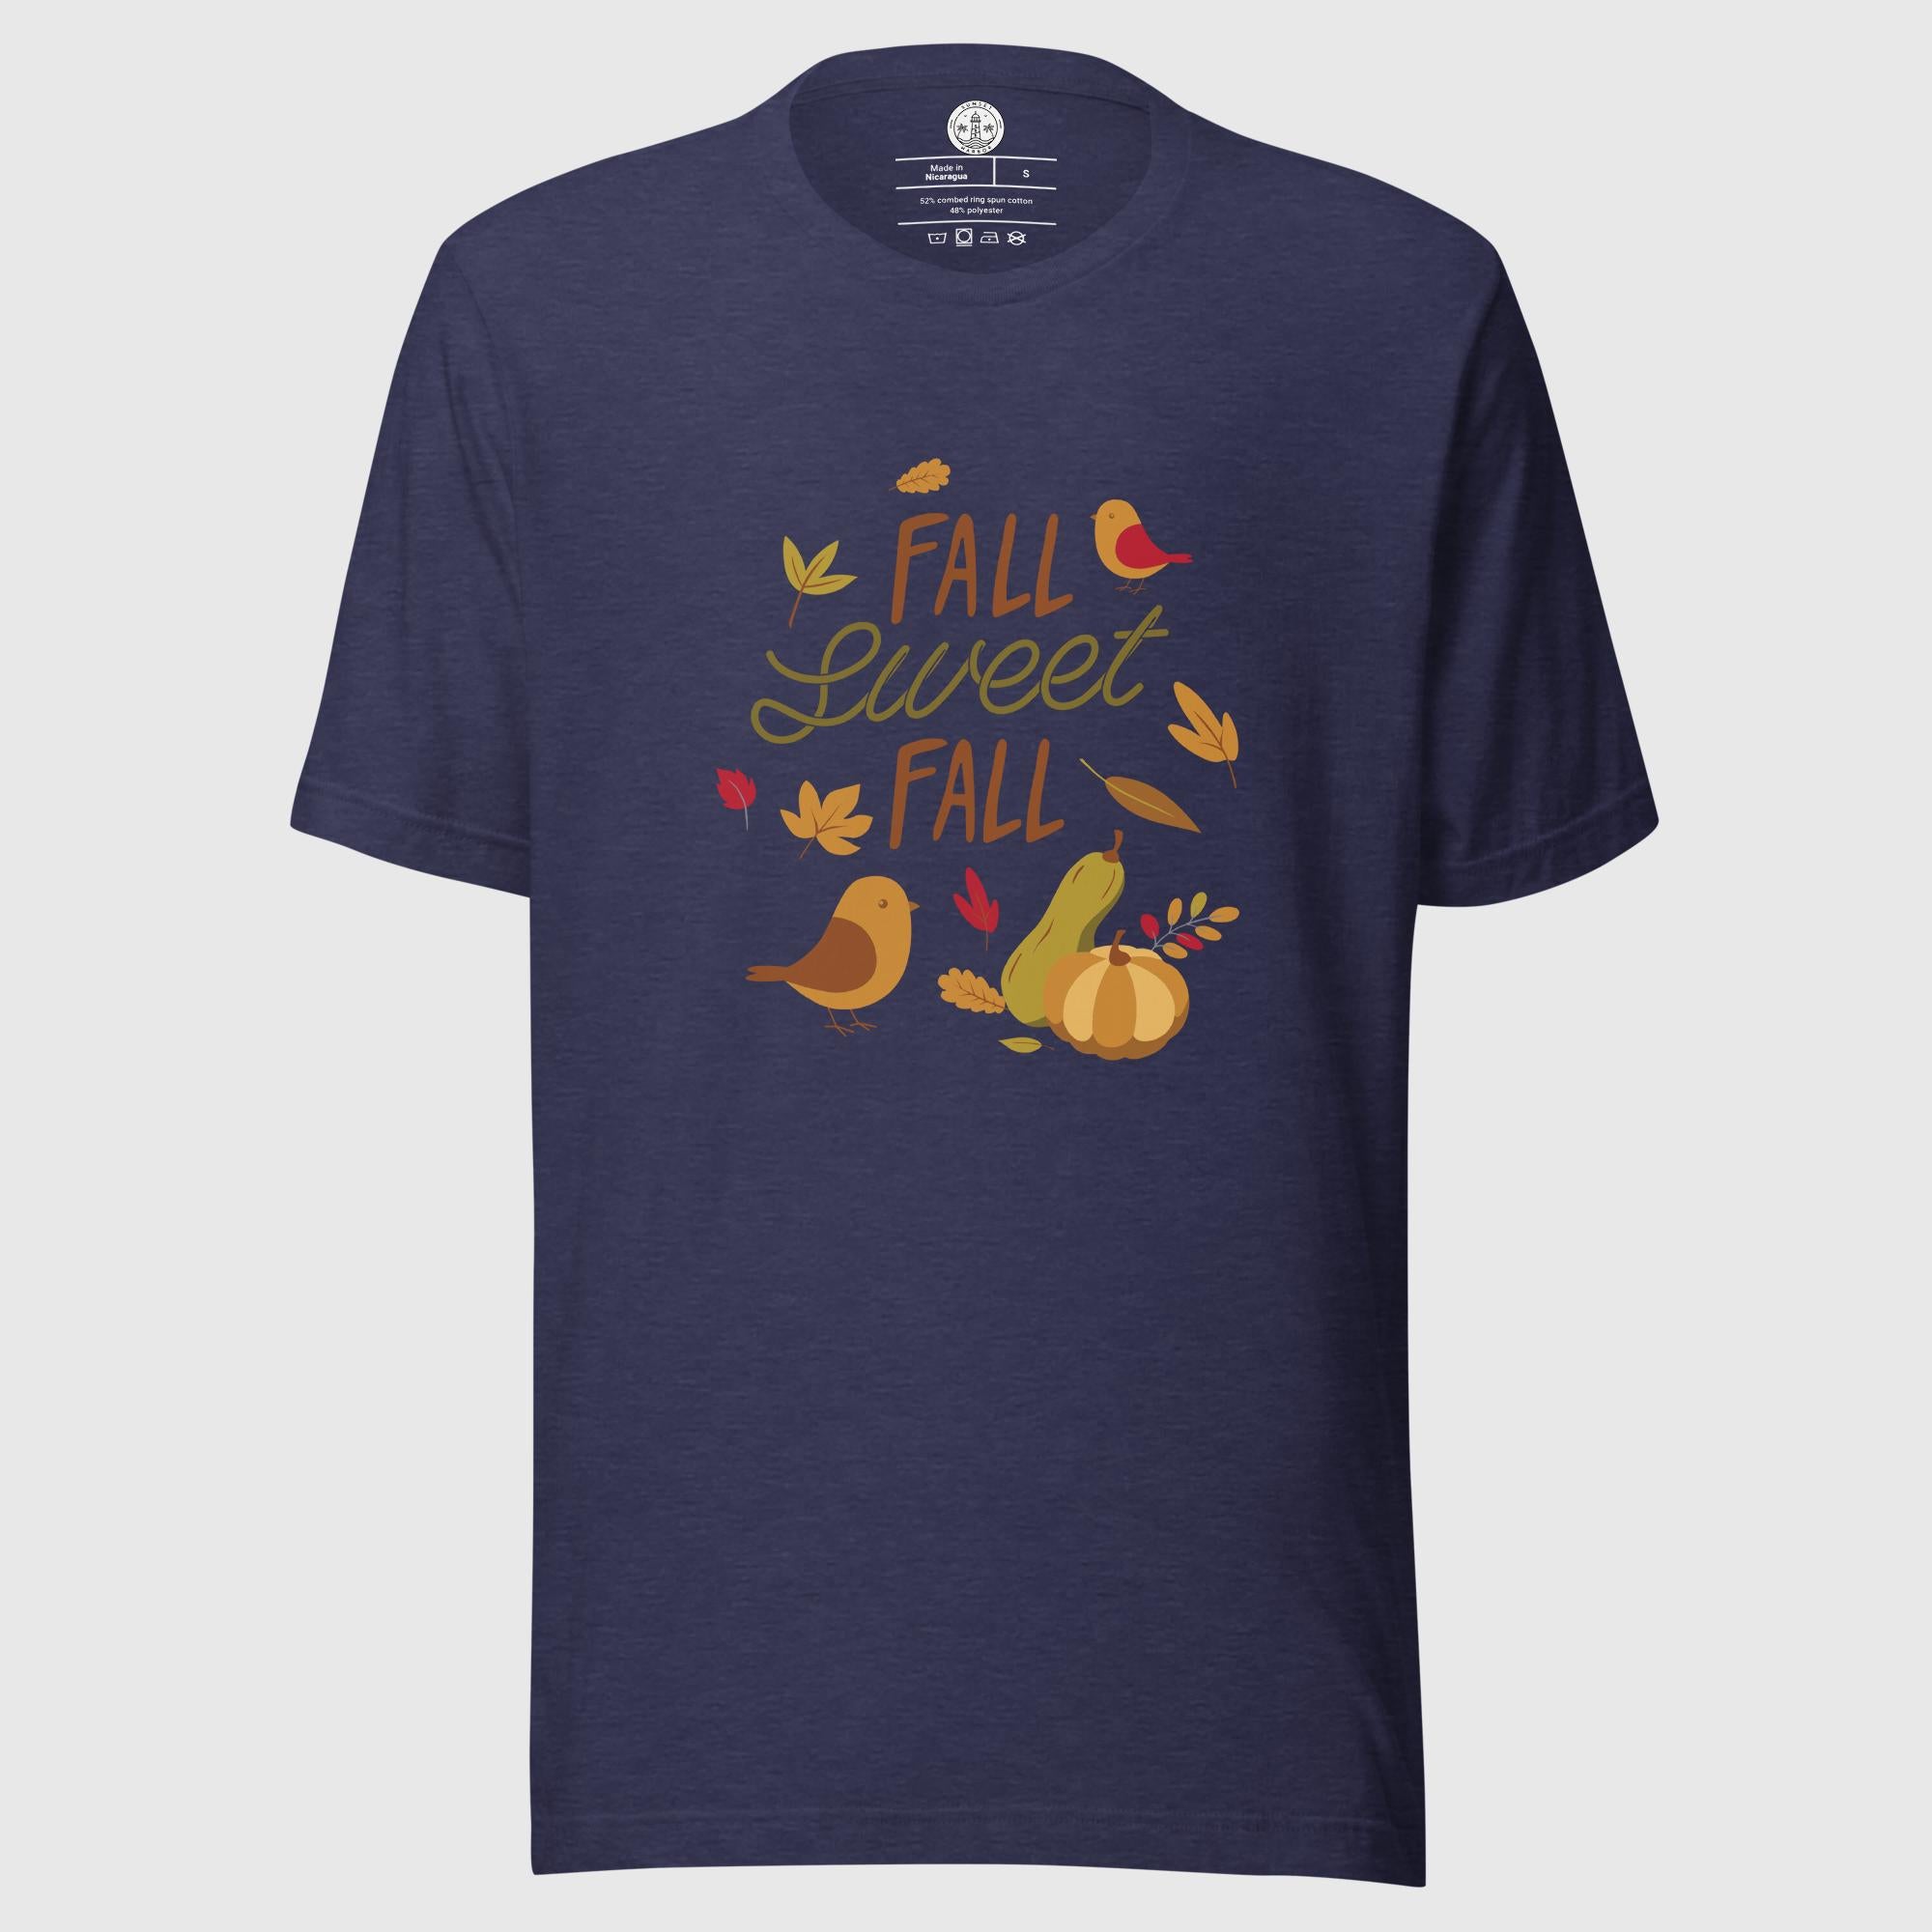 Camiseta mujer - Fall Sweet Fall